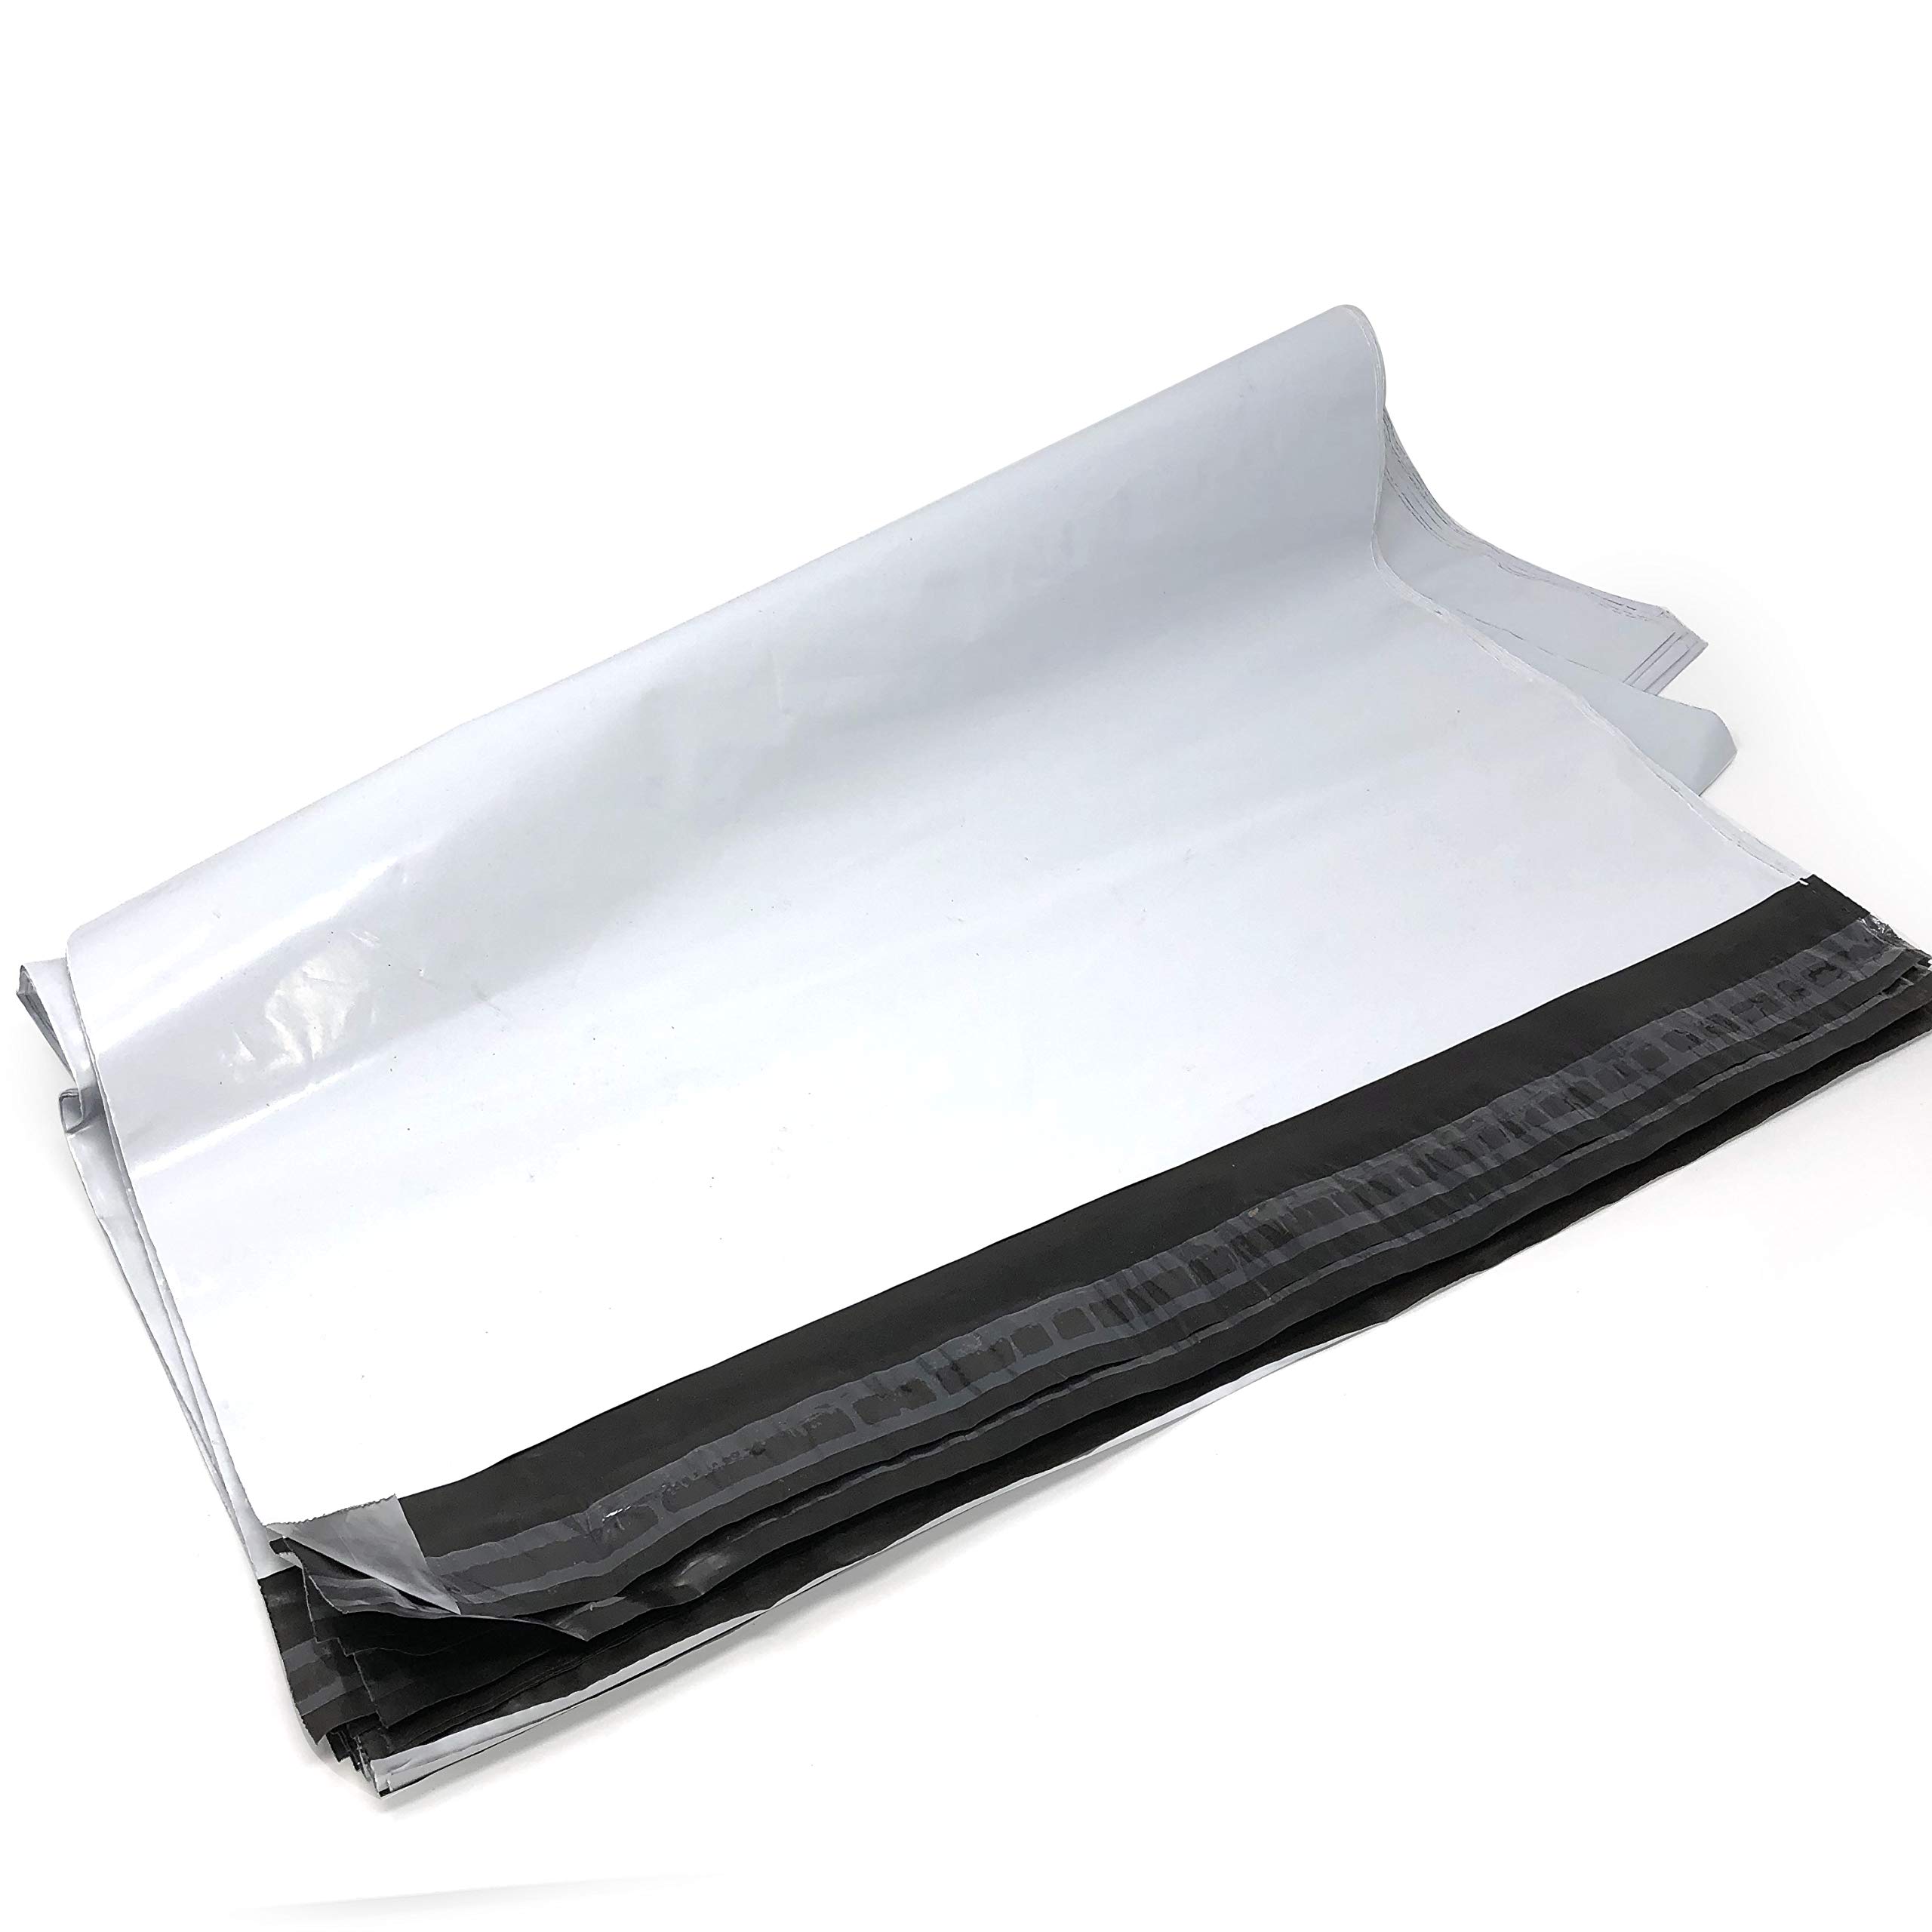 Allgala Poly Mailers Shipping Envelopes Bags Waterproof/Self Sealing/2.5 Mil/White - 19x24-500 Bag